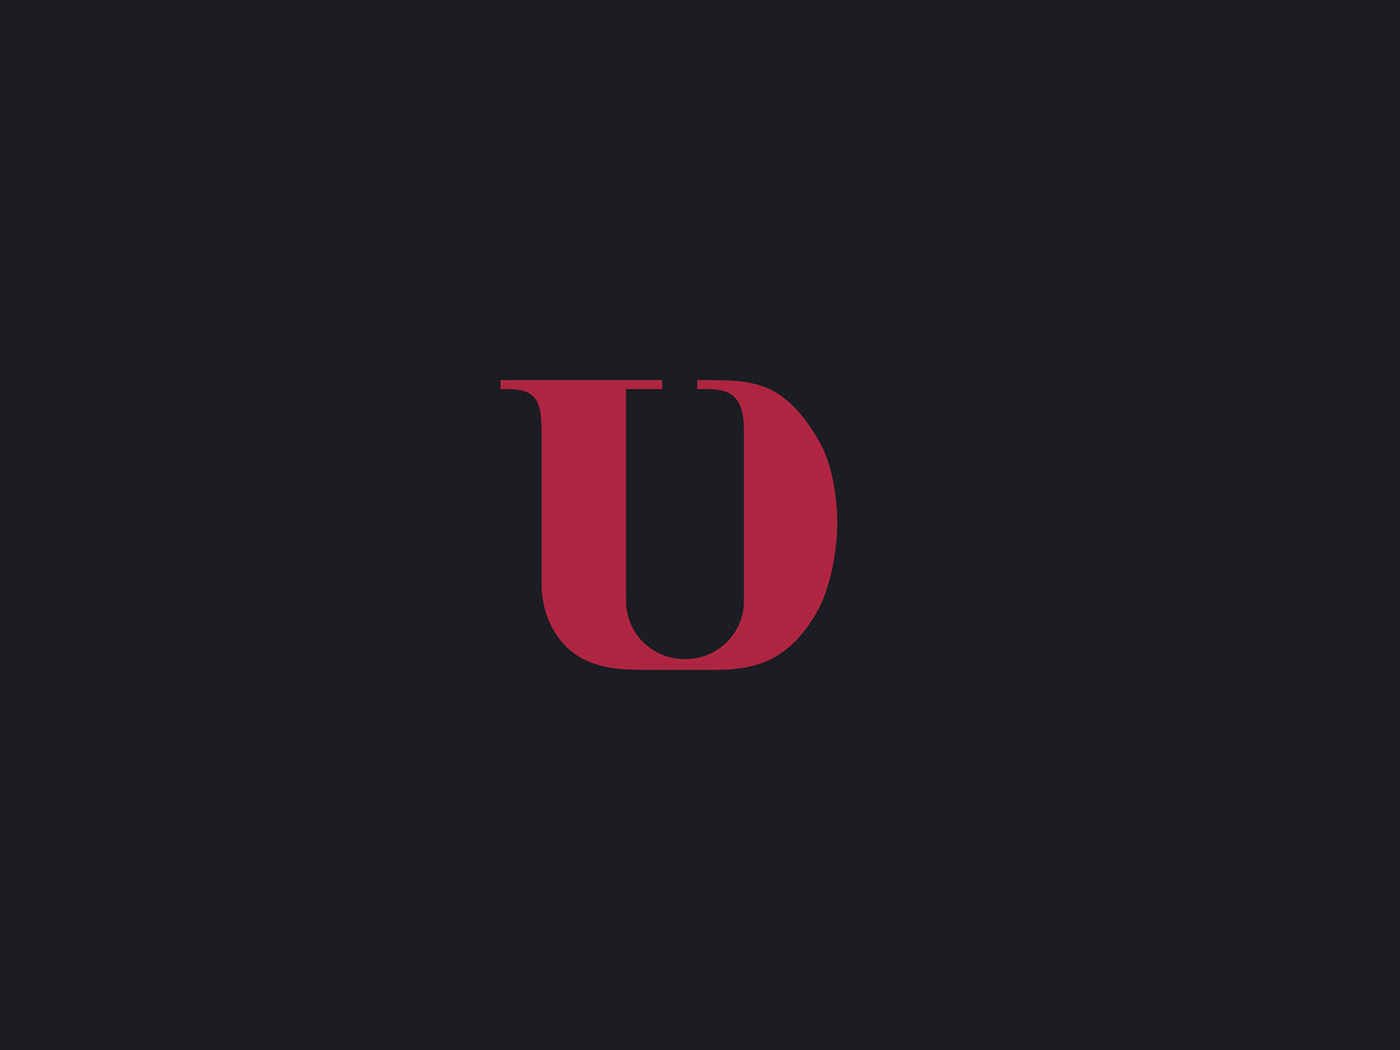 Urban design studio brand identity print logo stationary